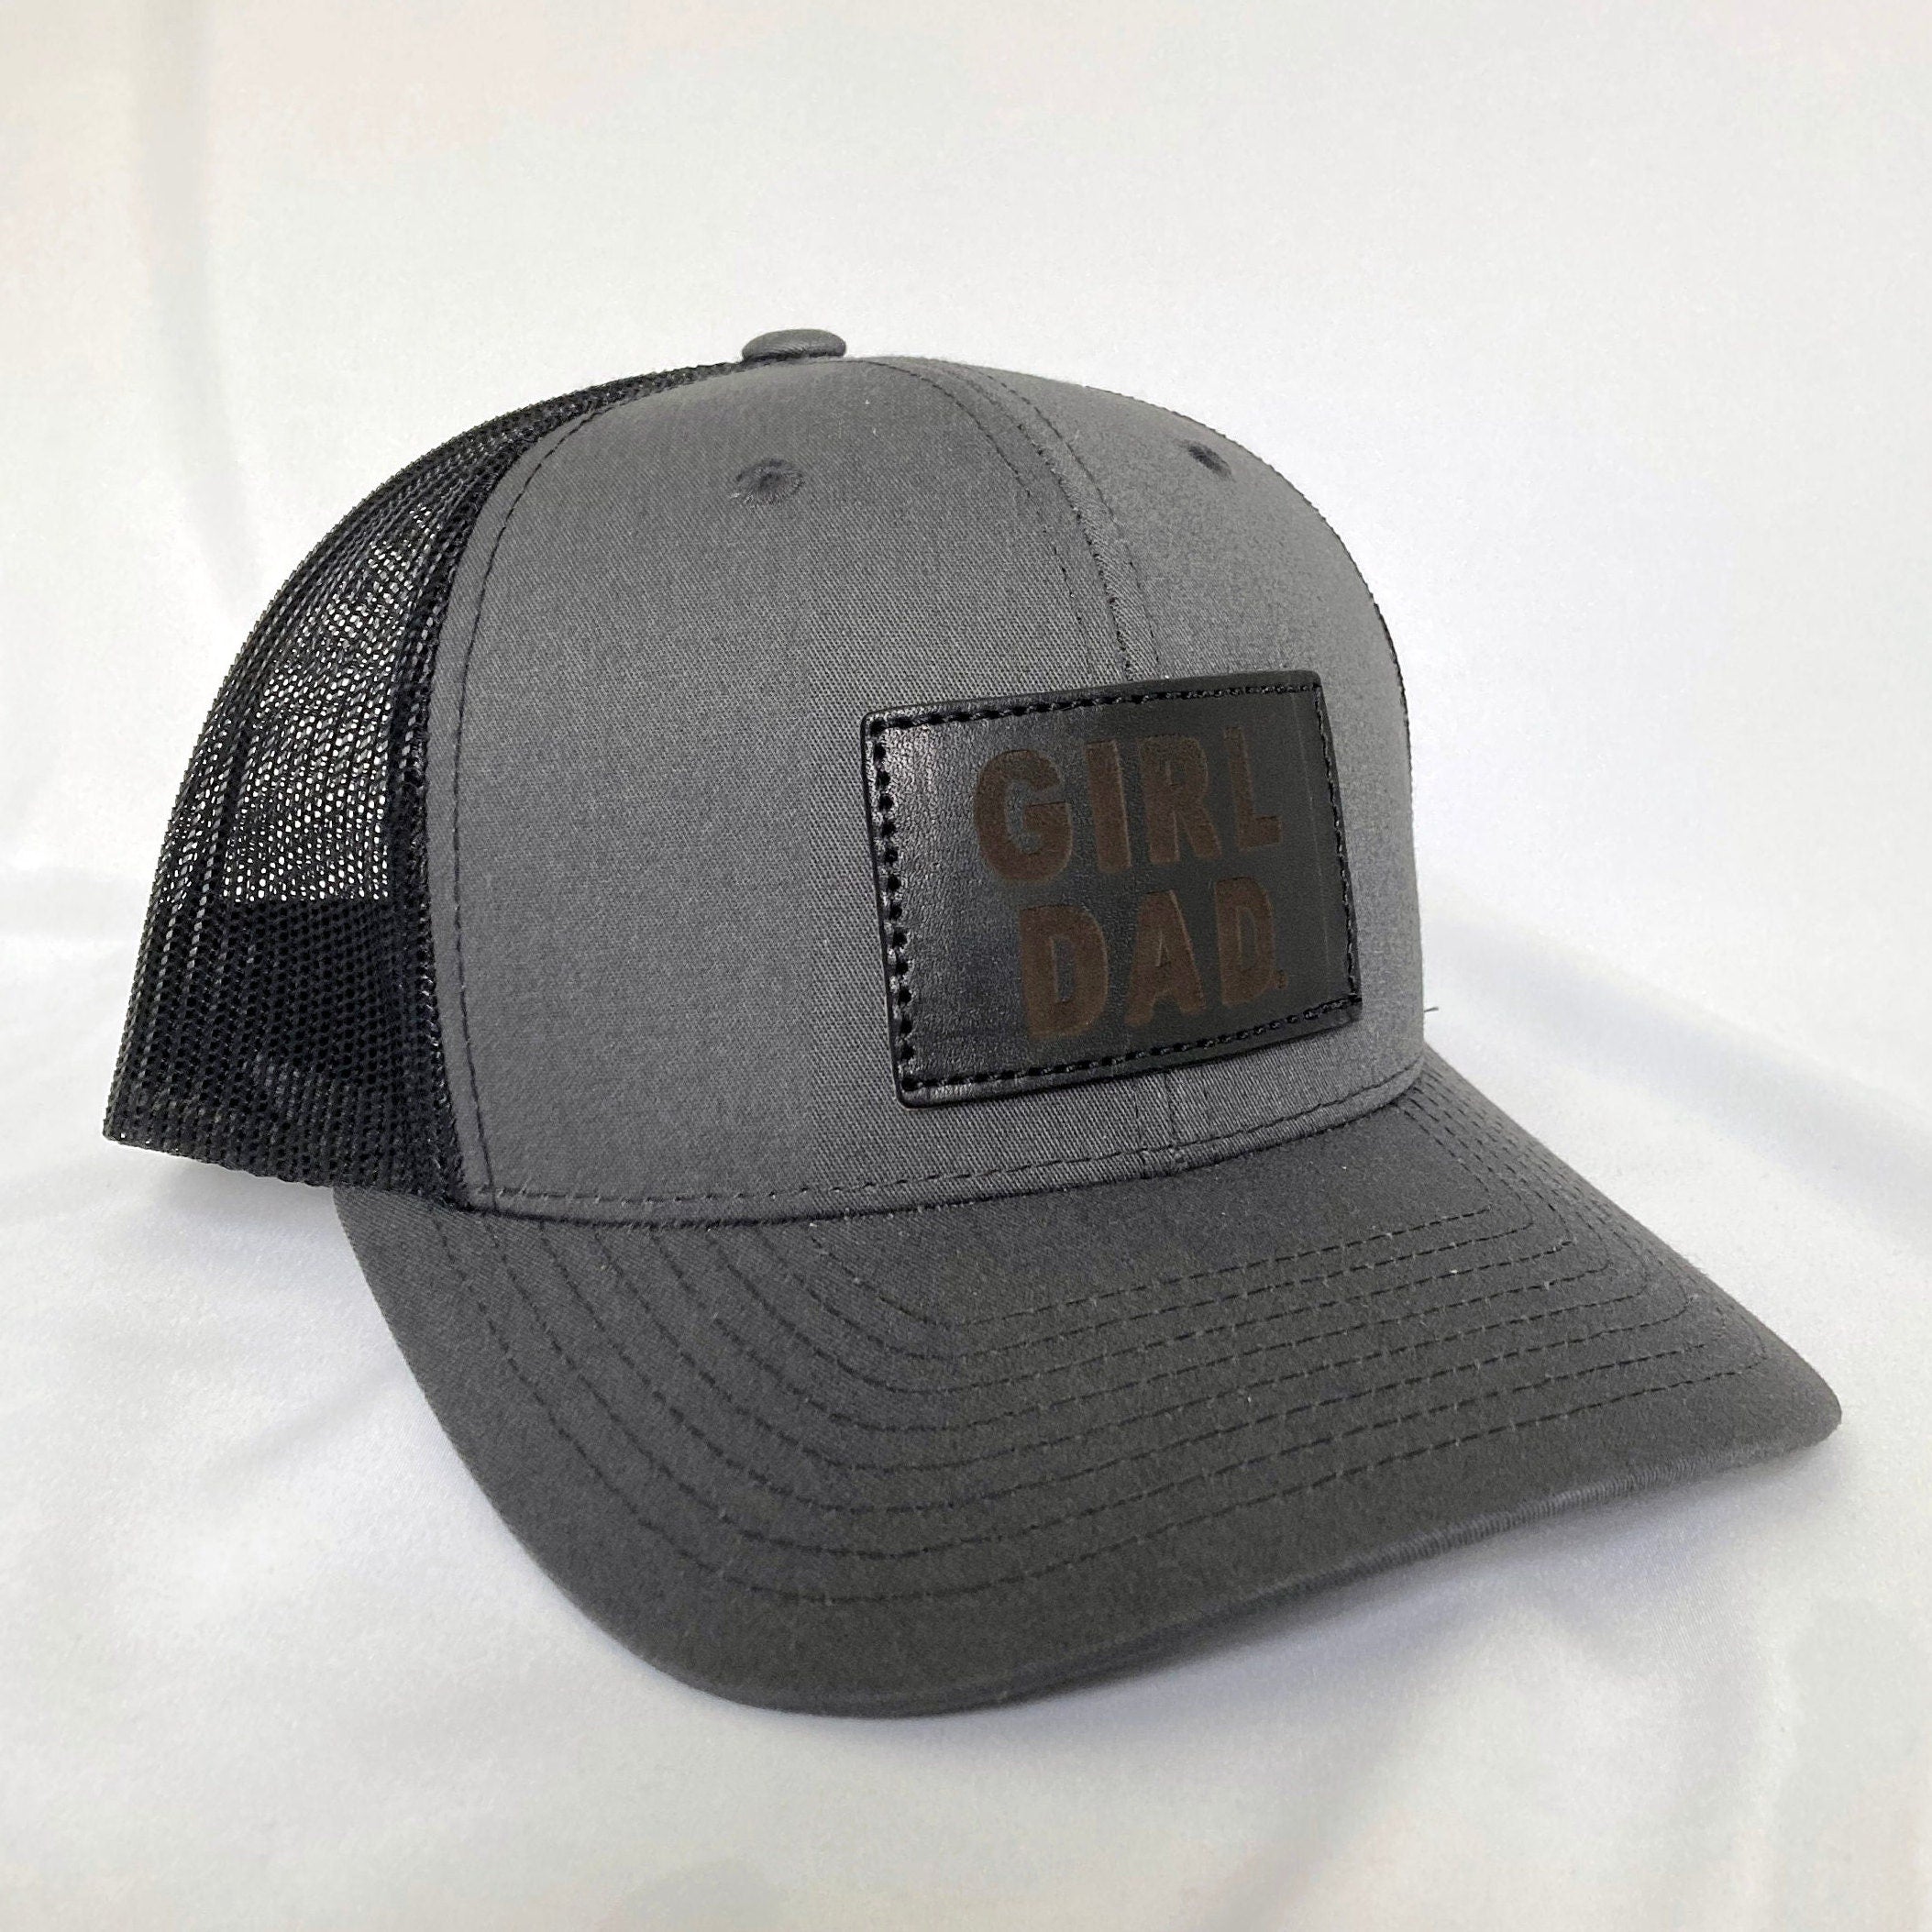 Girldad® Black Charcoal Leather Patch Trucker Hat